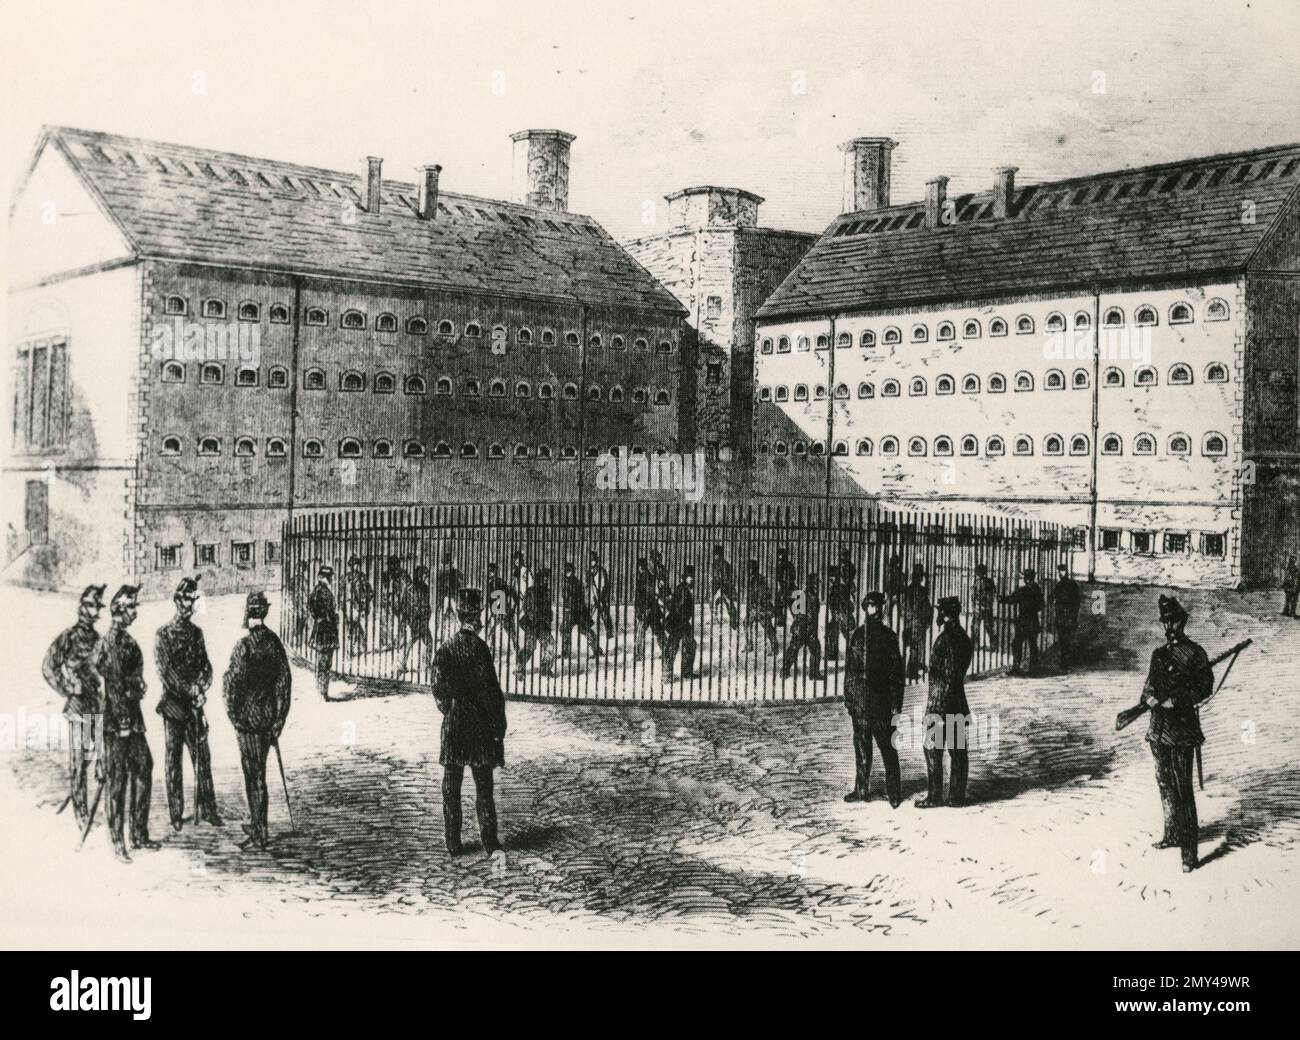 Segregation of the Fenians inside the Mountjoy Prison, Dublin, Ireland 1866, illustration Stock Photo